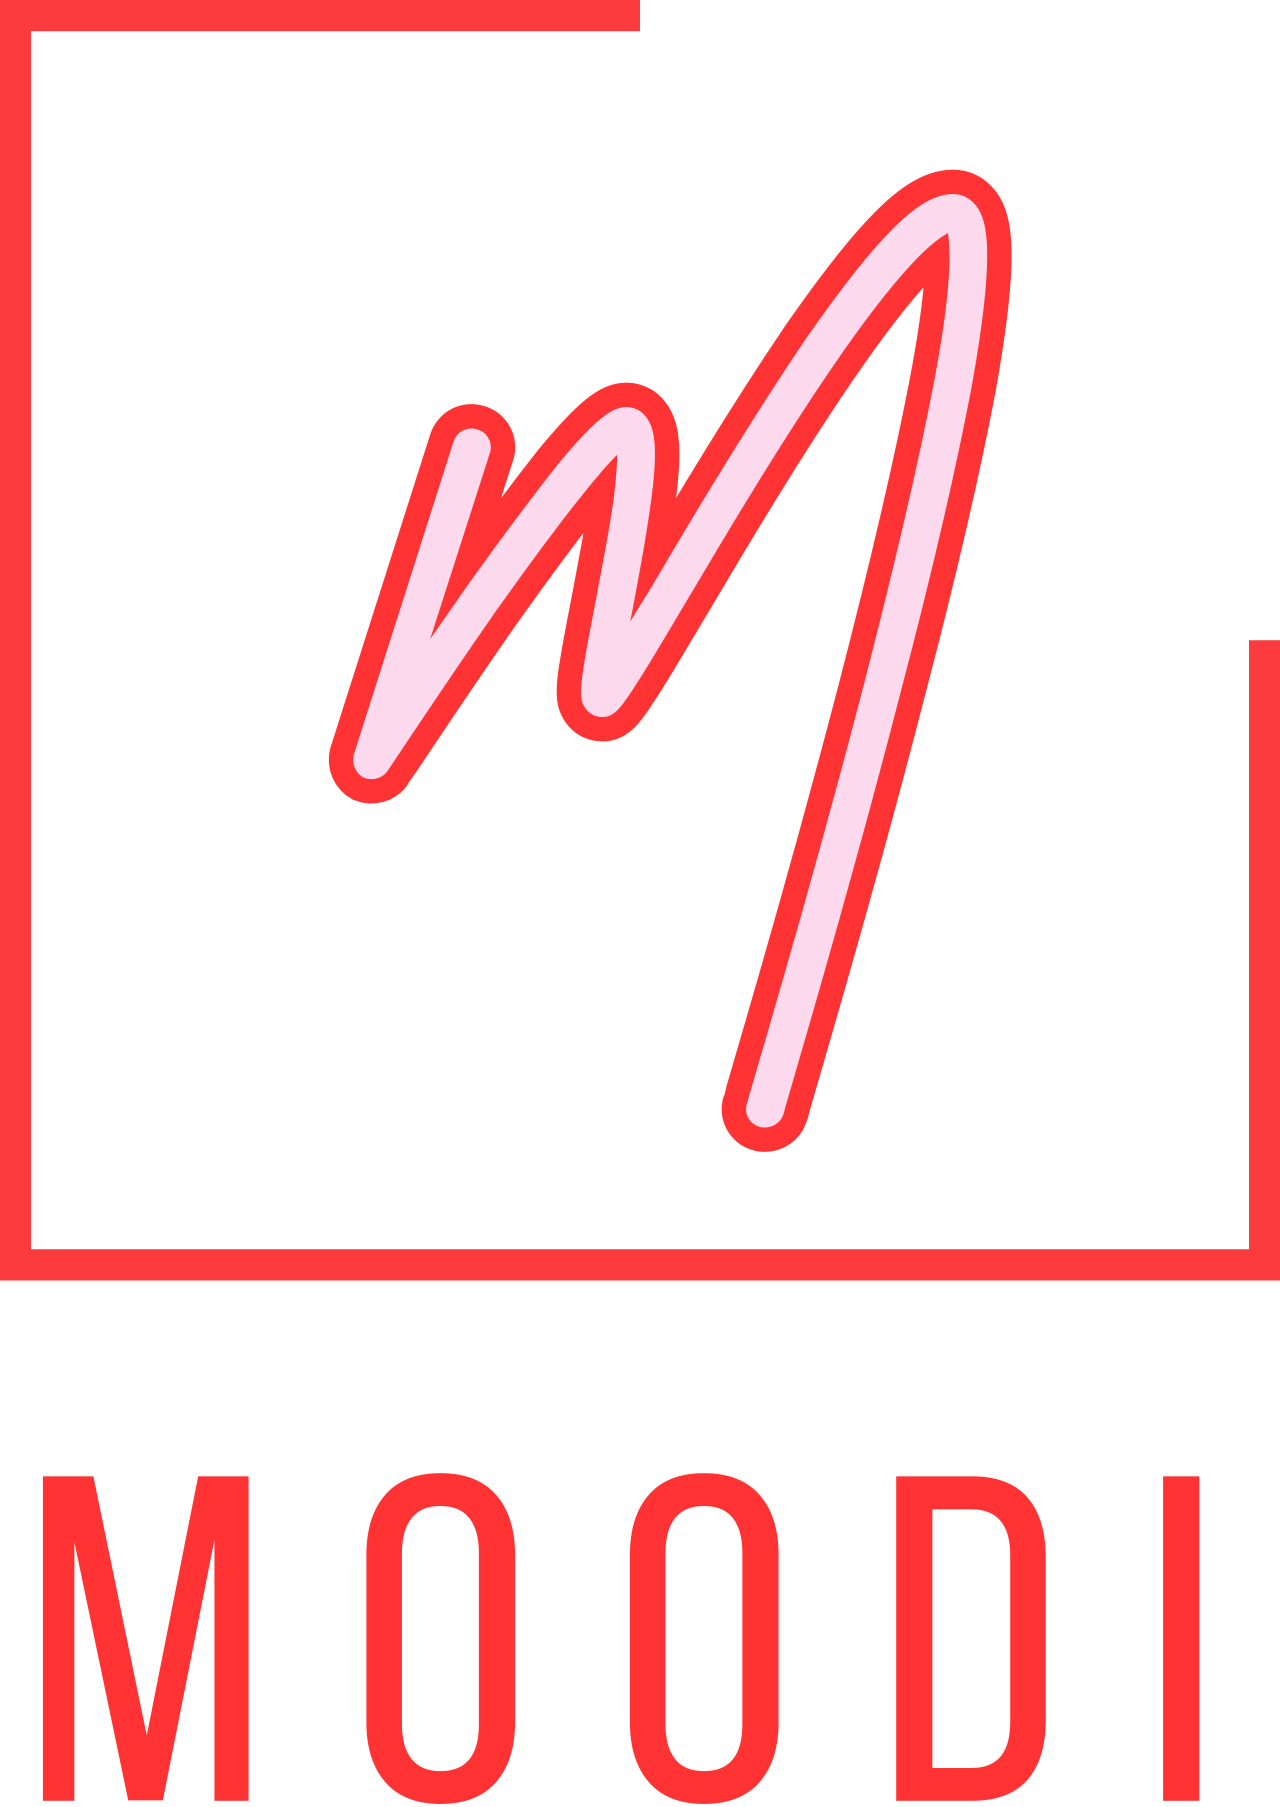 MOODI's web page